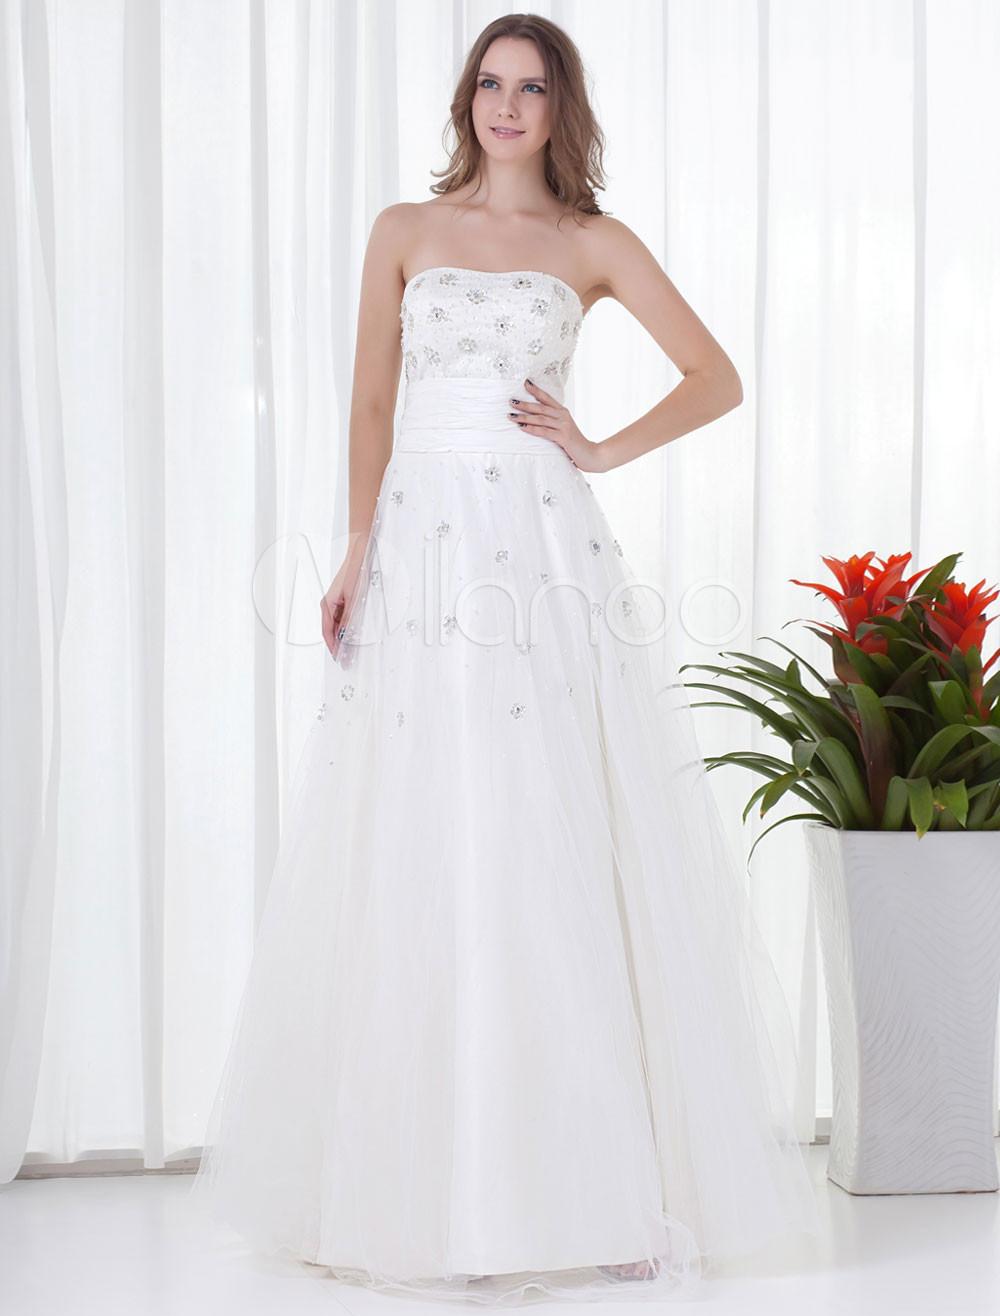 Foto Blanco neto rebordear vestido de fiesta sin tirantes de longitud del piso foto 593473